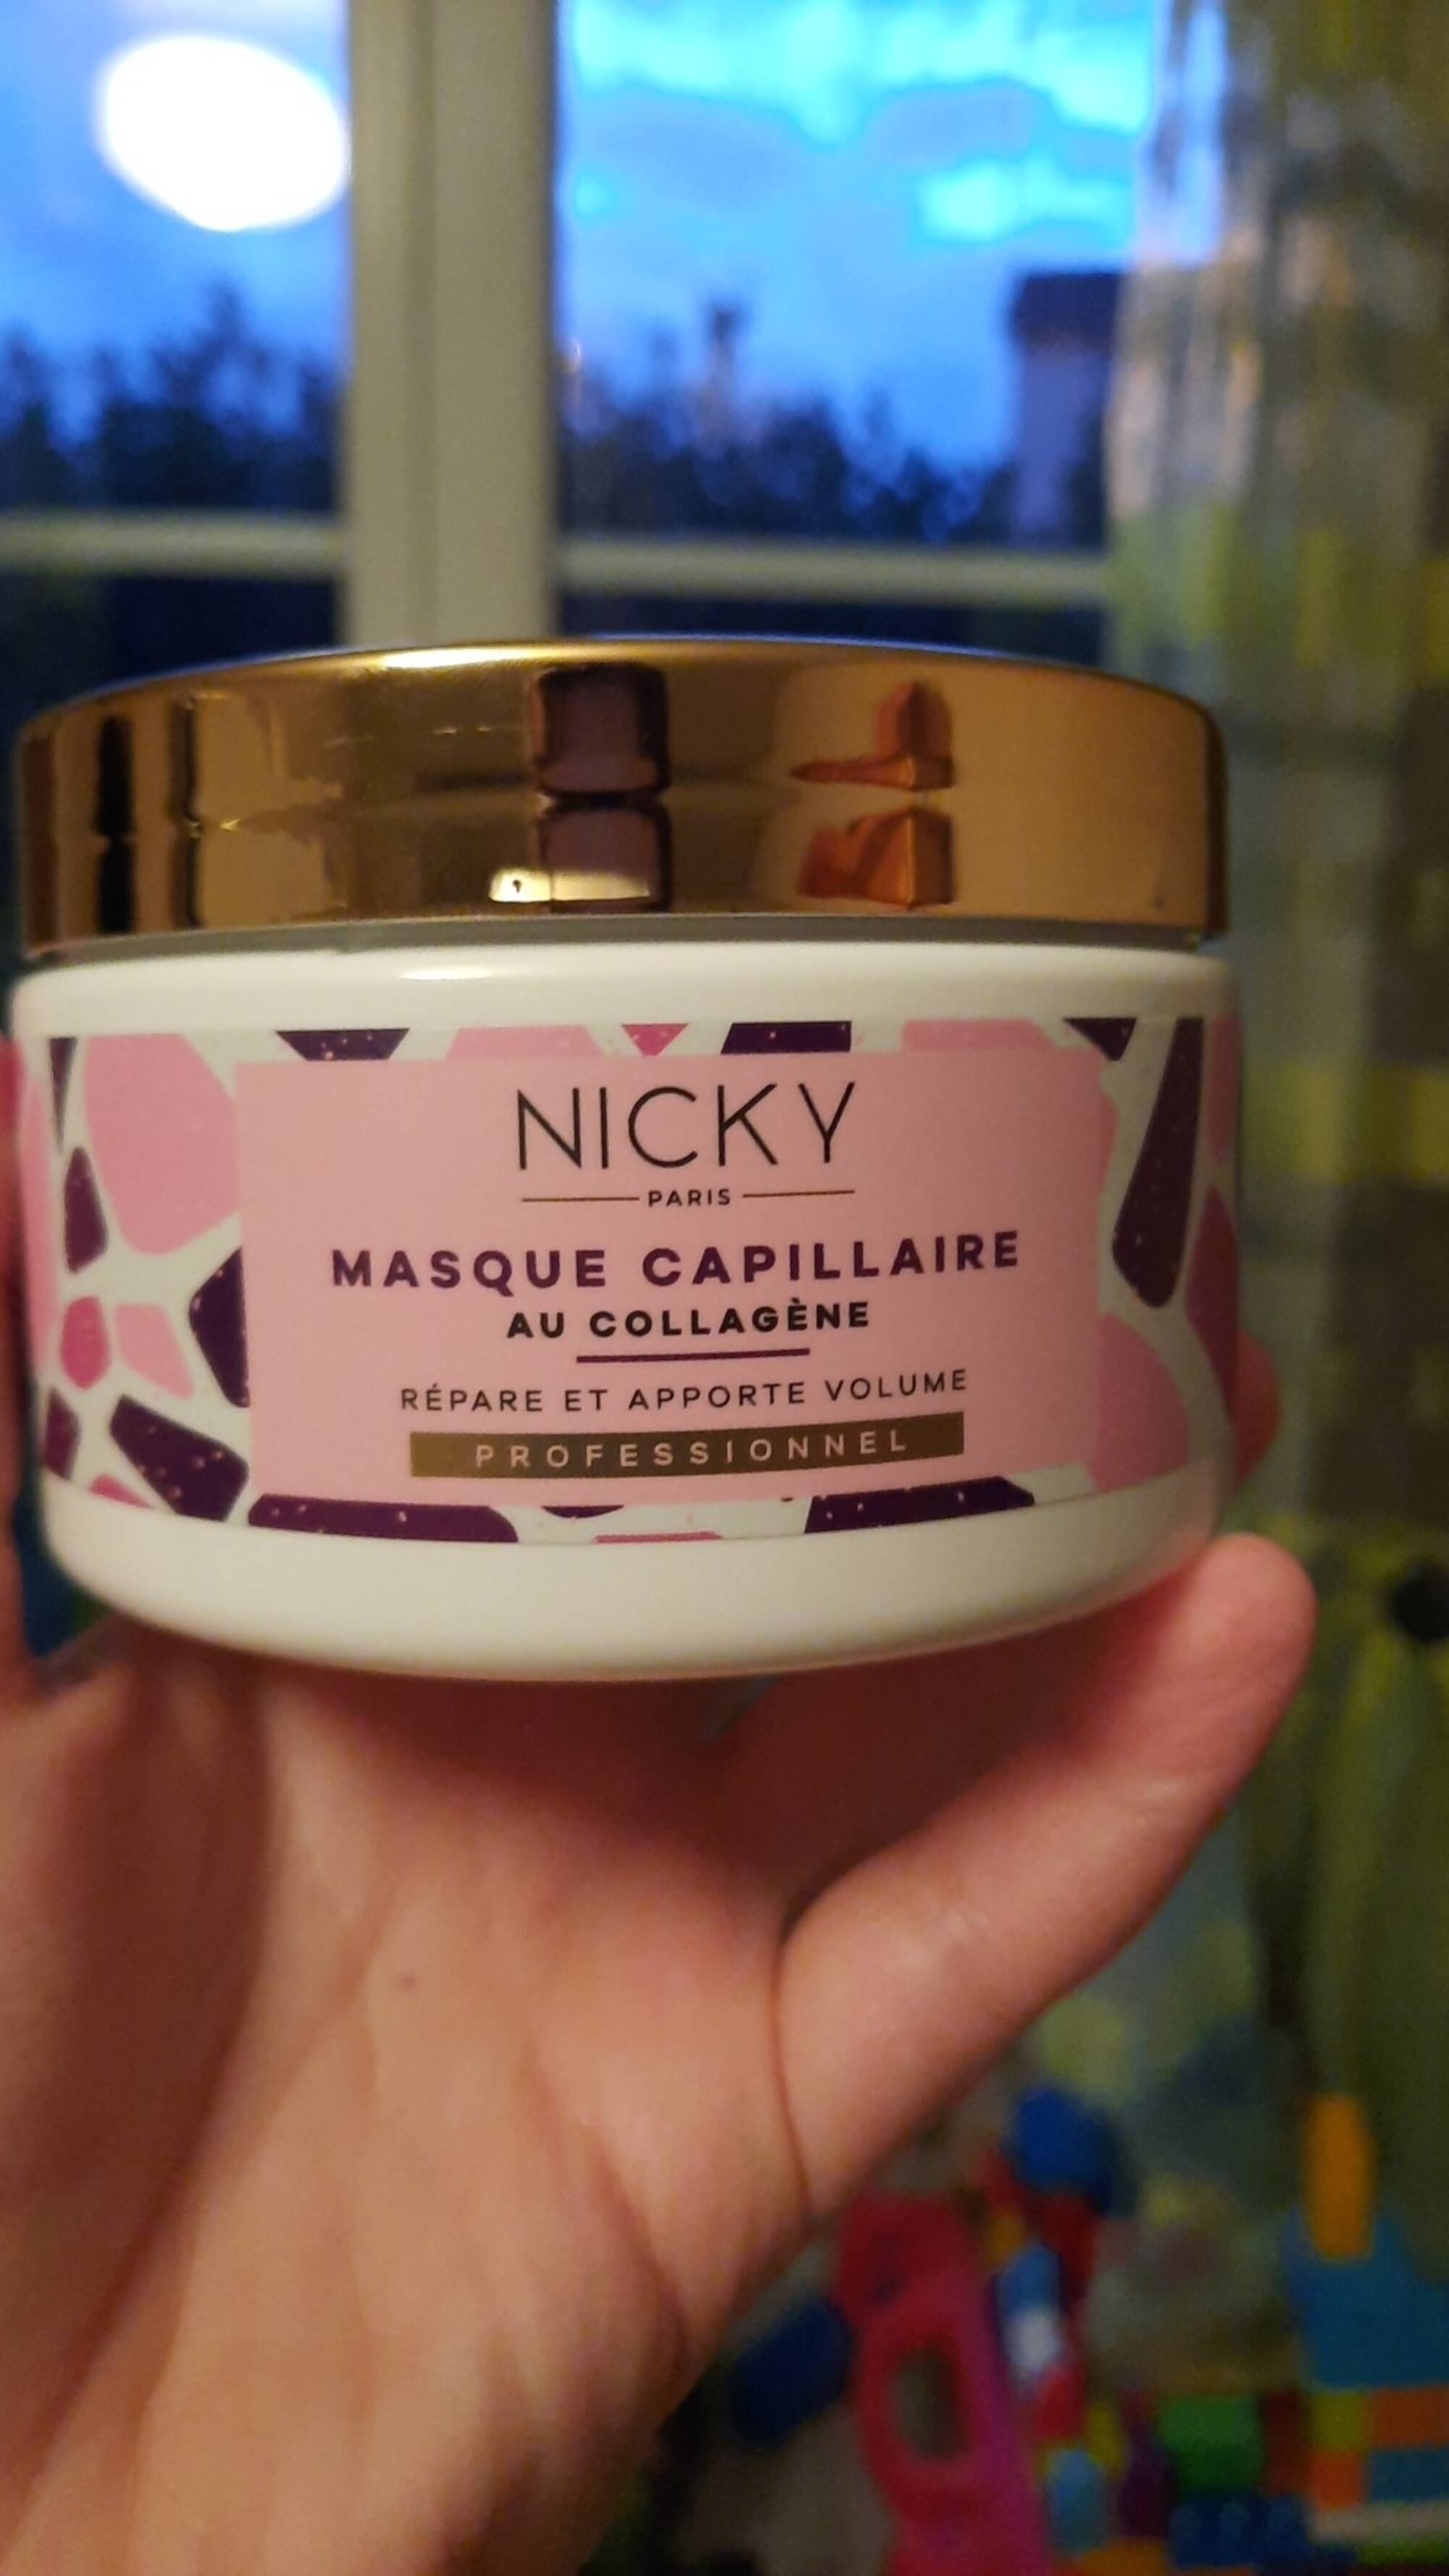 NICKY PARIS - Masque capillaire au collagène